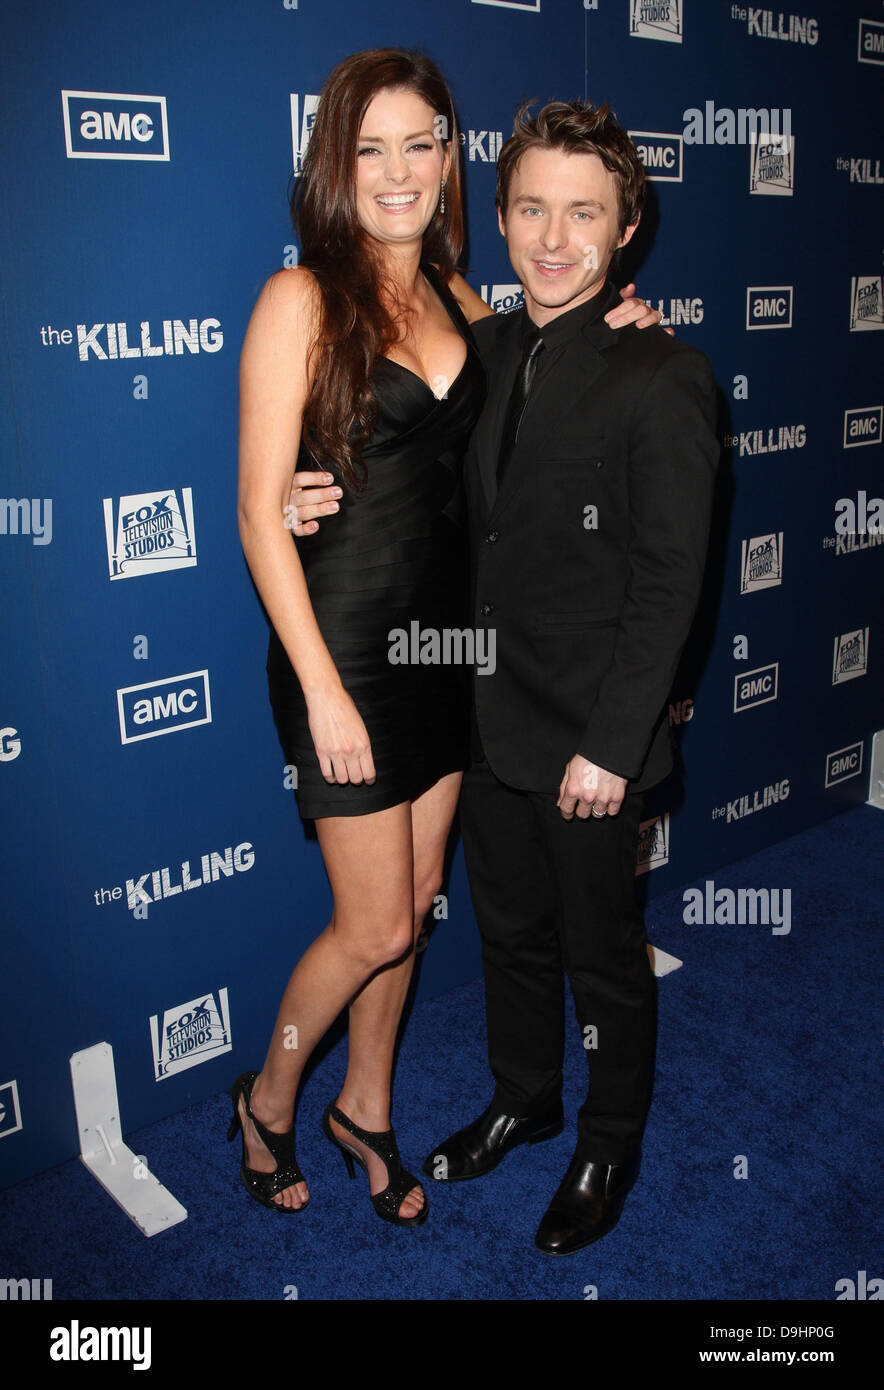 Jamie Anne Allman, Marshall Allman Premiere Of AMC's Series "The Killing"  held at the Harmony Gold Theater Los Angeles, California - 21.03.11 Stock  Photo - Alamy